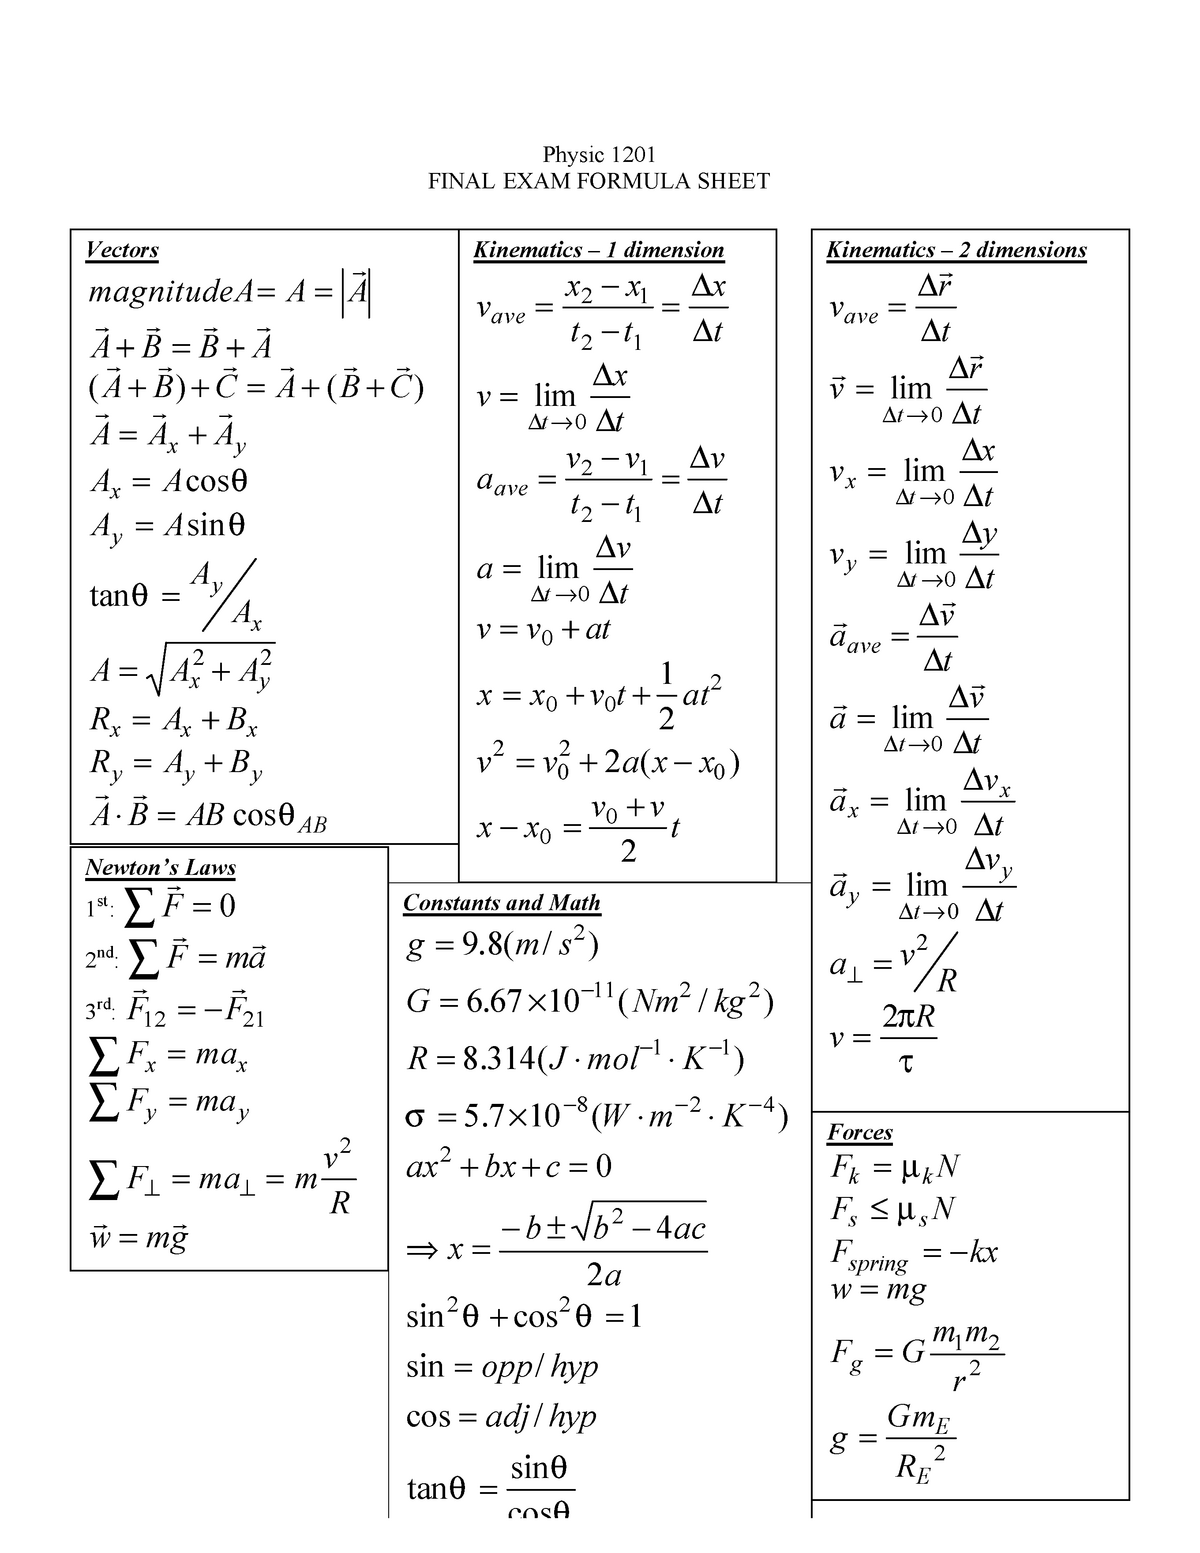 Physics formulas - Physic 1201 FINAL EXAM FORMULA SHEET Vectors ...